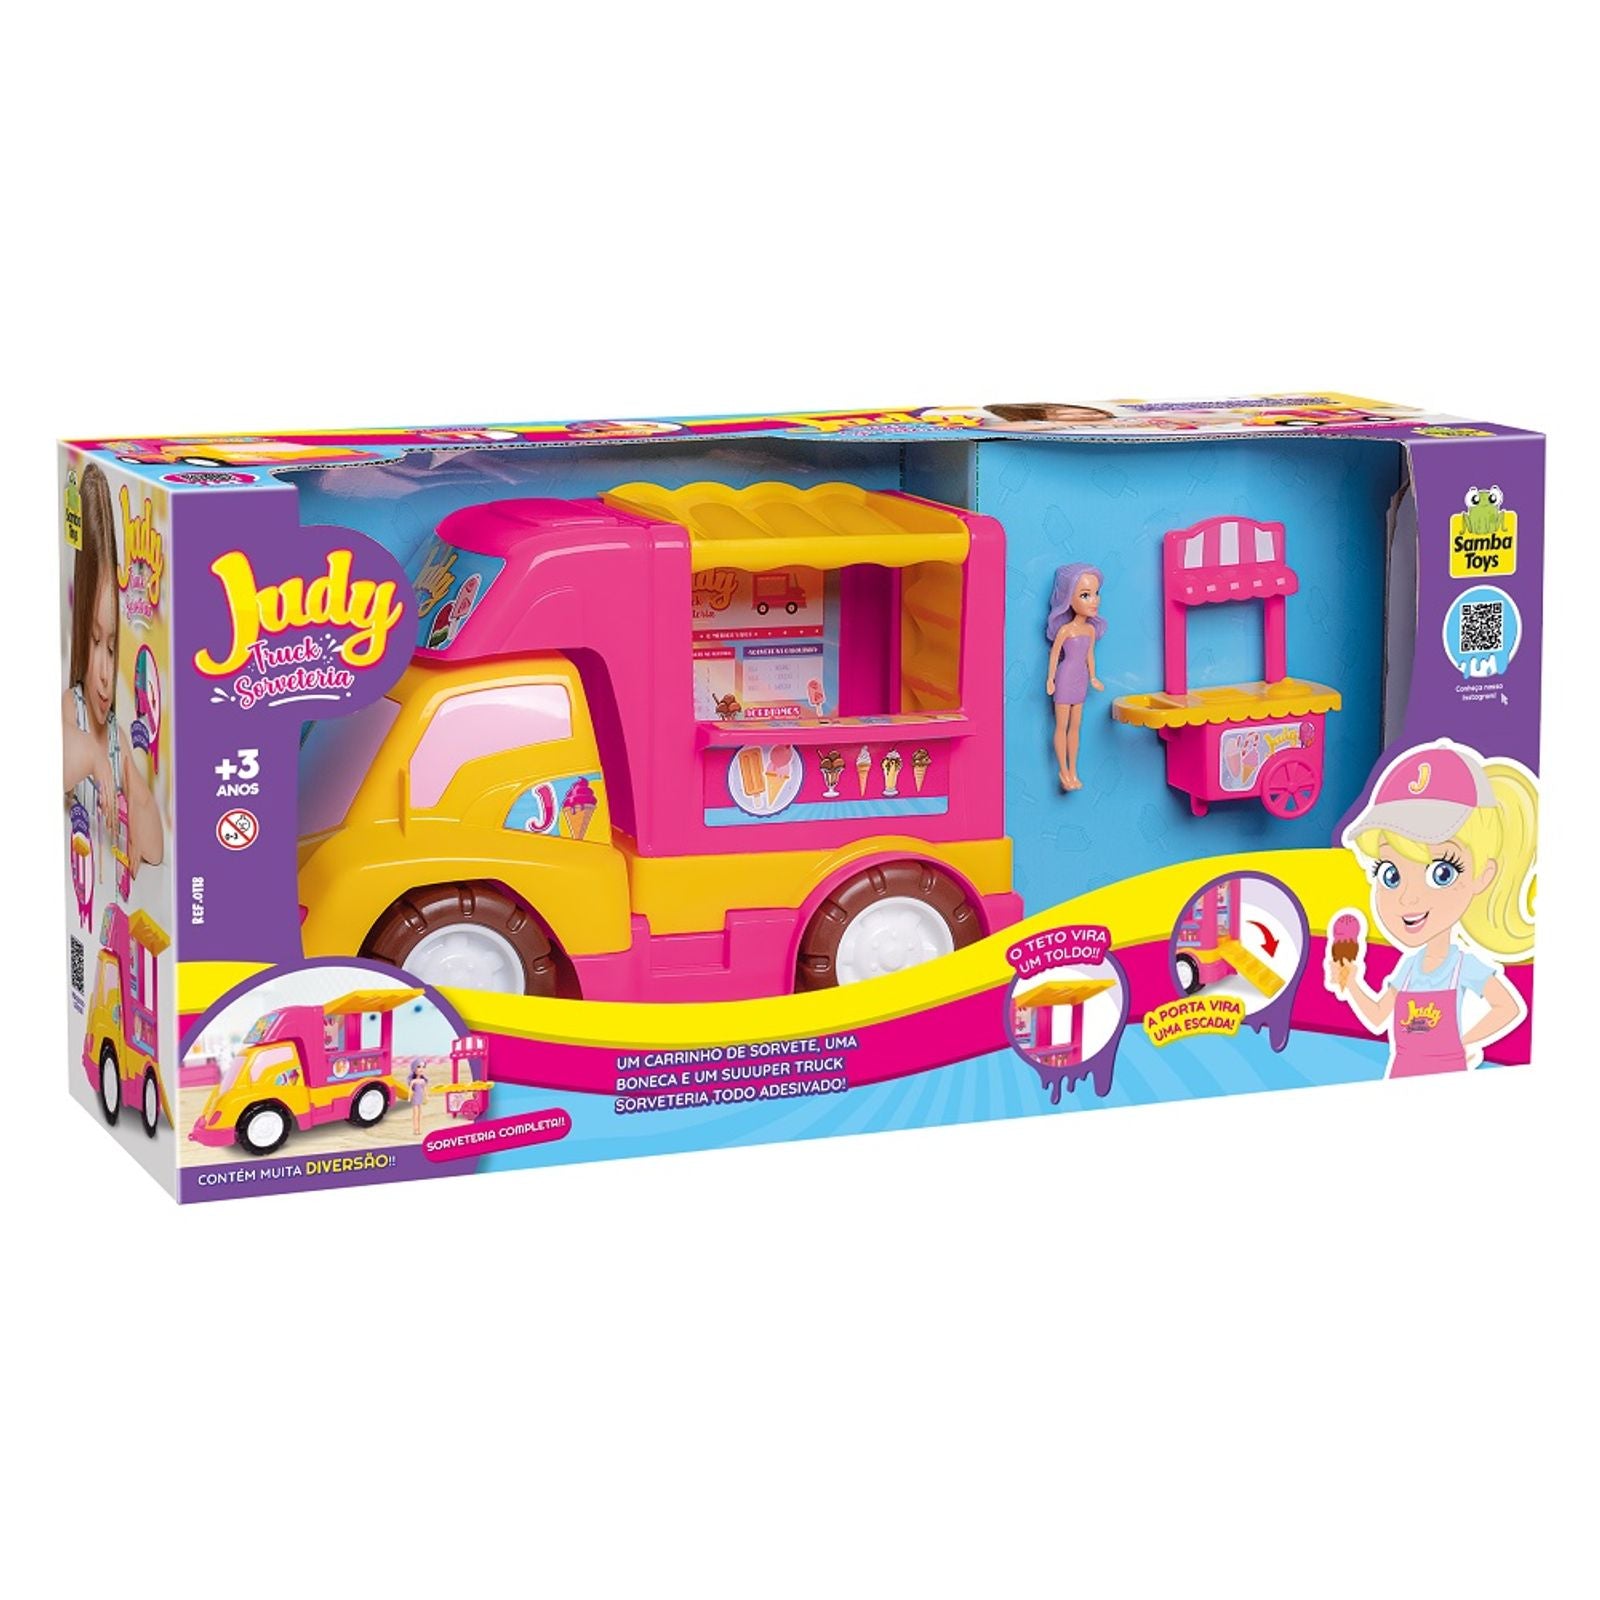 Sorveteria da Judy - Food Truck 0139 - Samba Toys